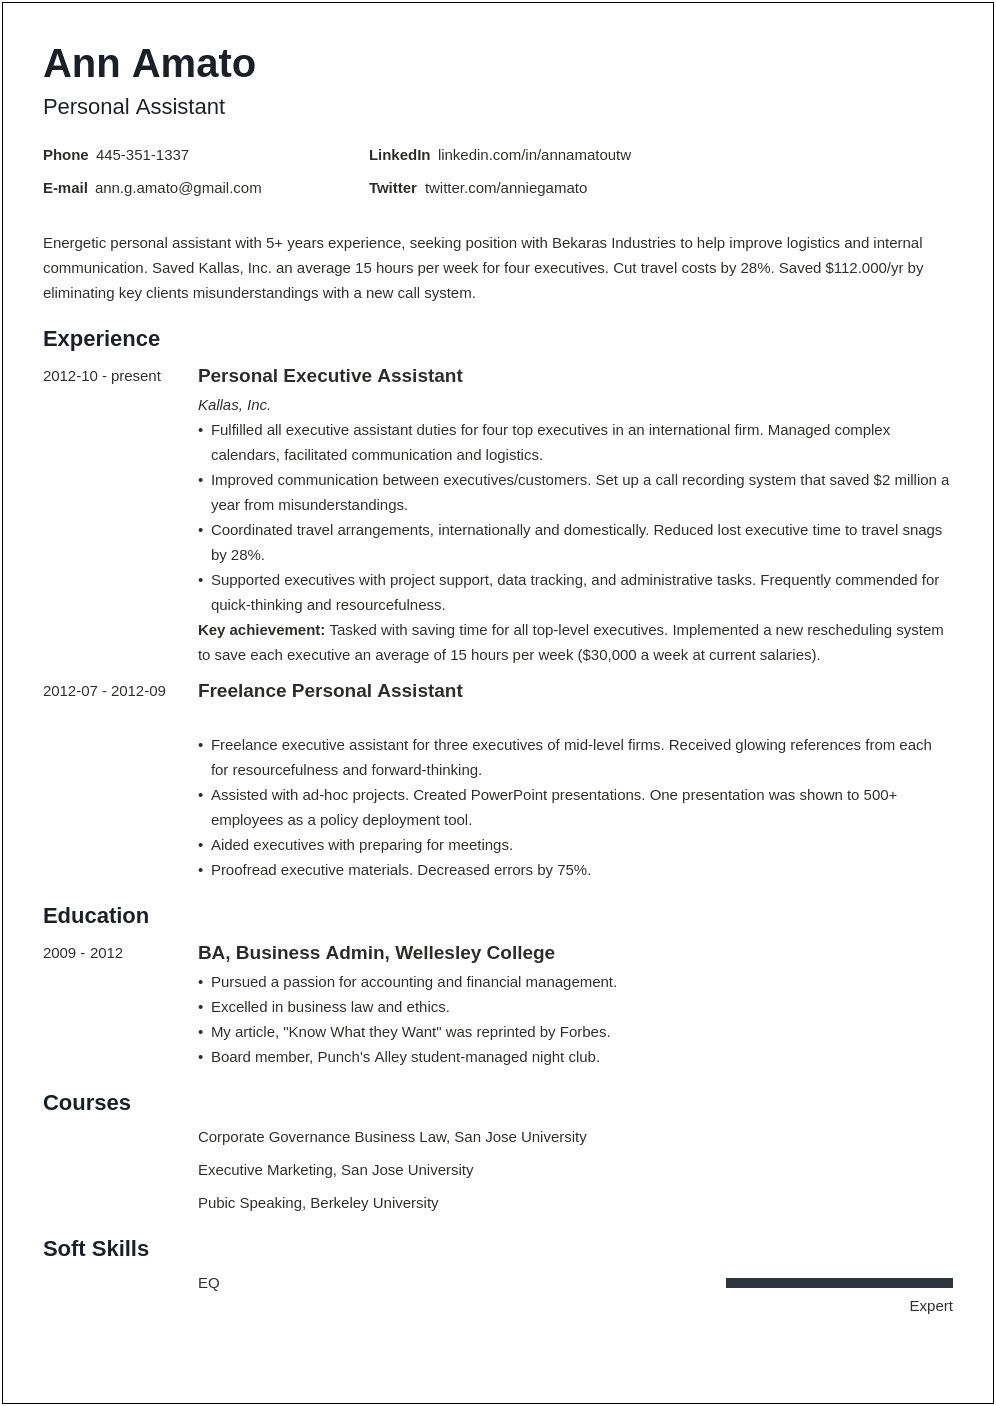 Resume Application Format For Job